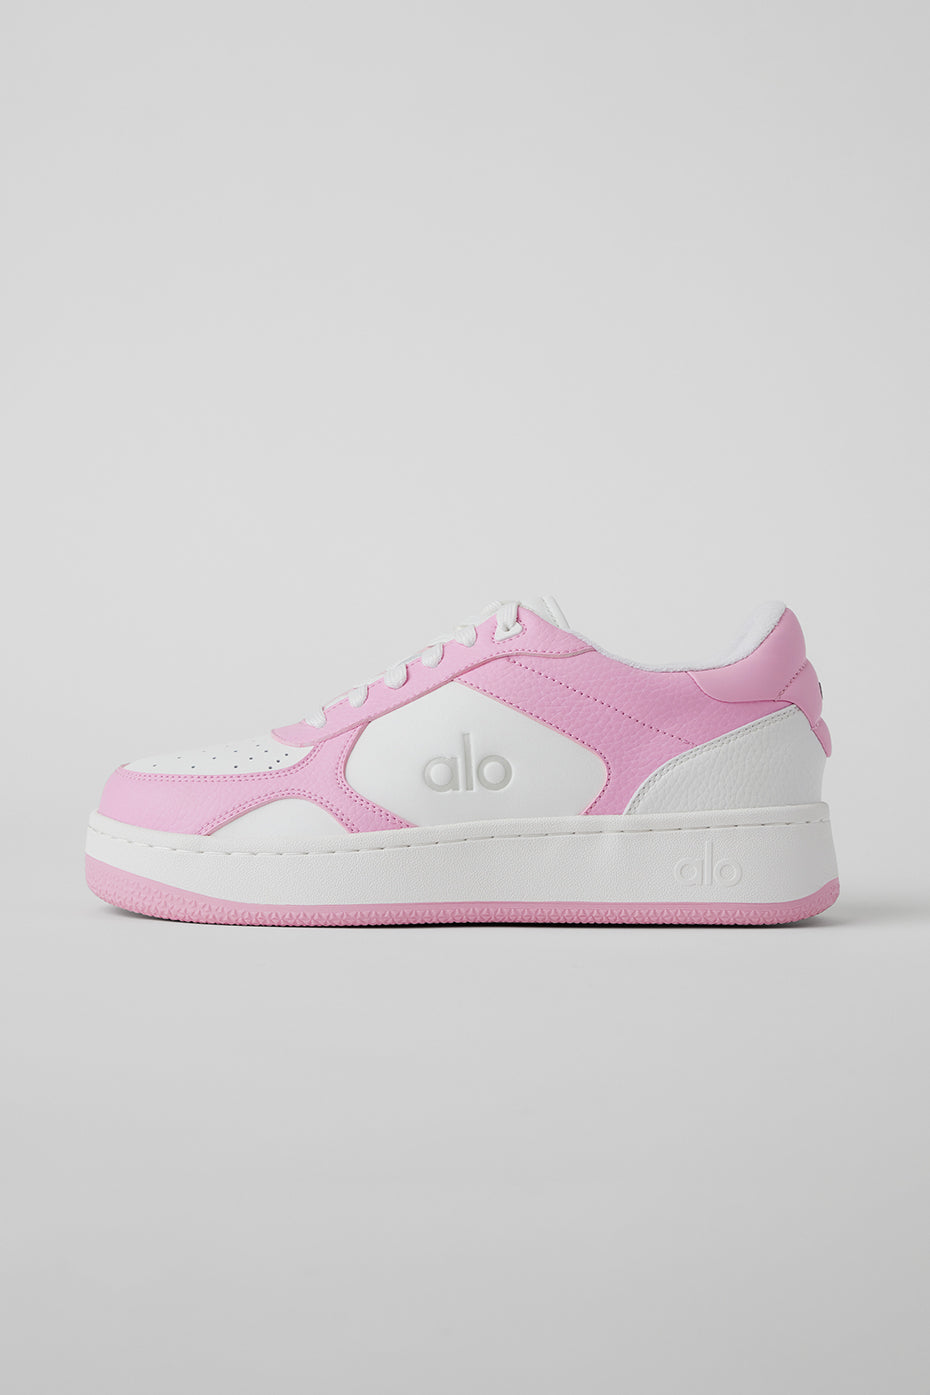 Alo x 01 Classic - Pink/White - Pink/White / 3.5M/5W